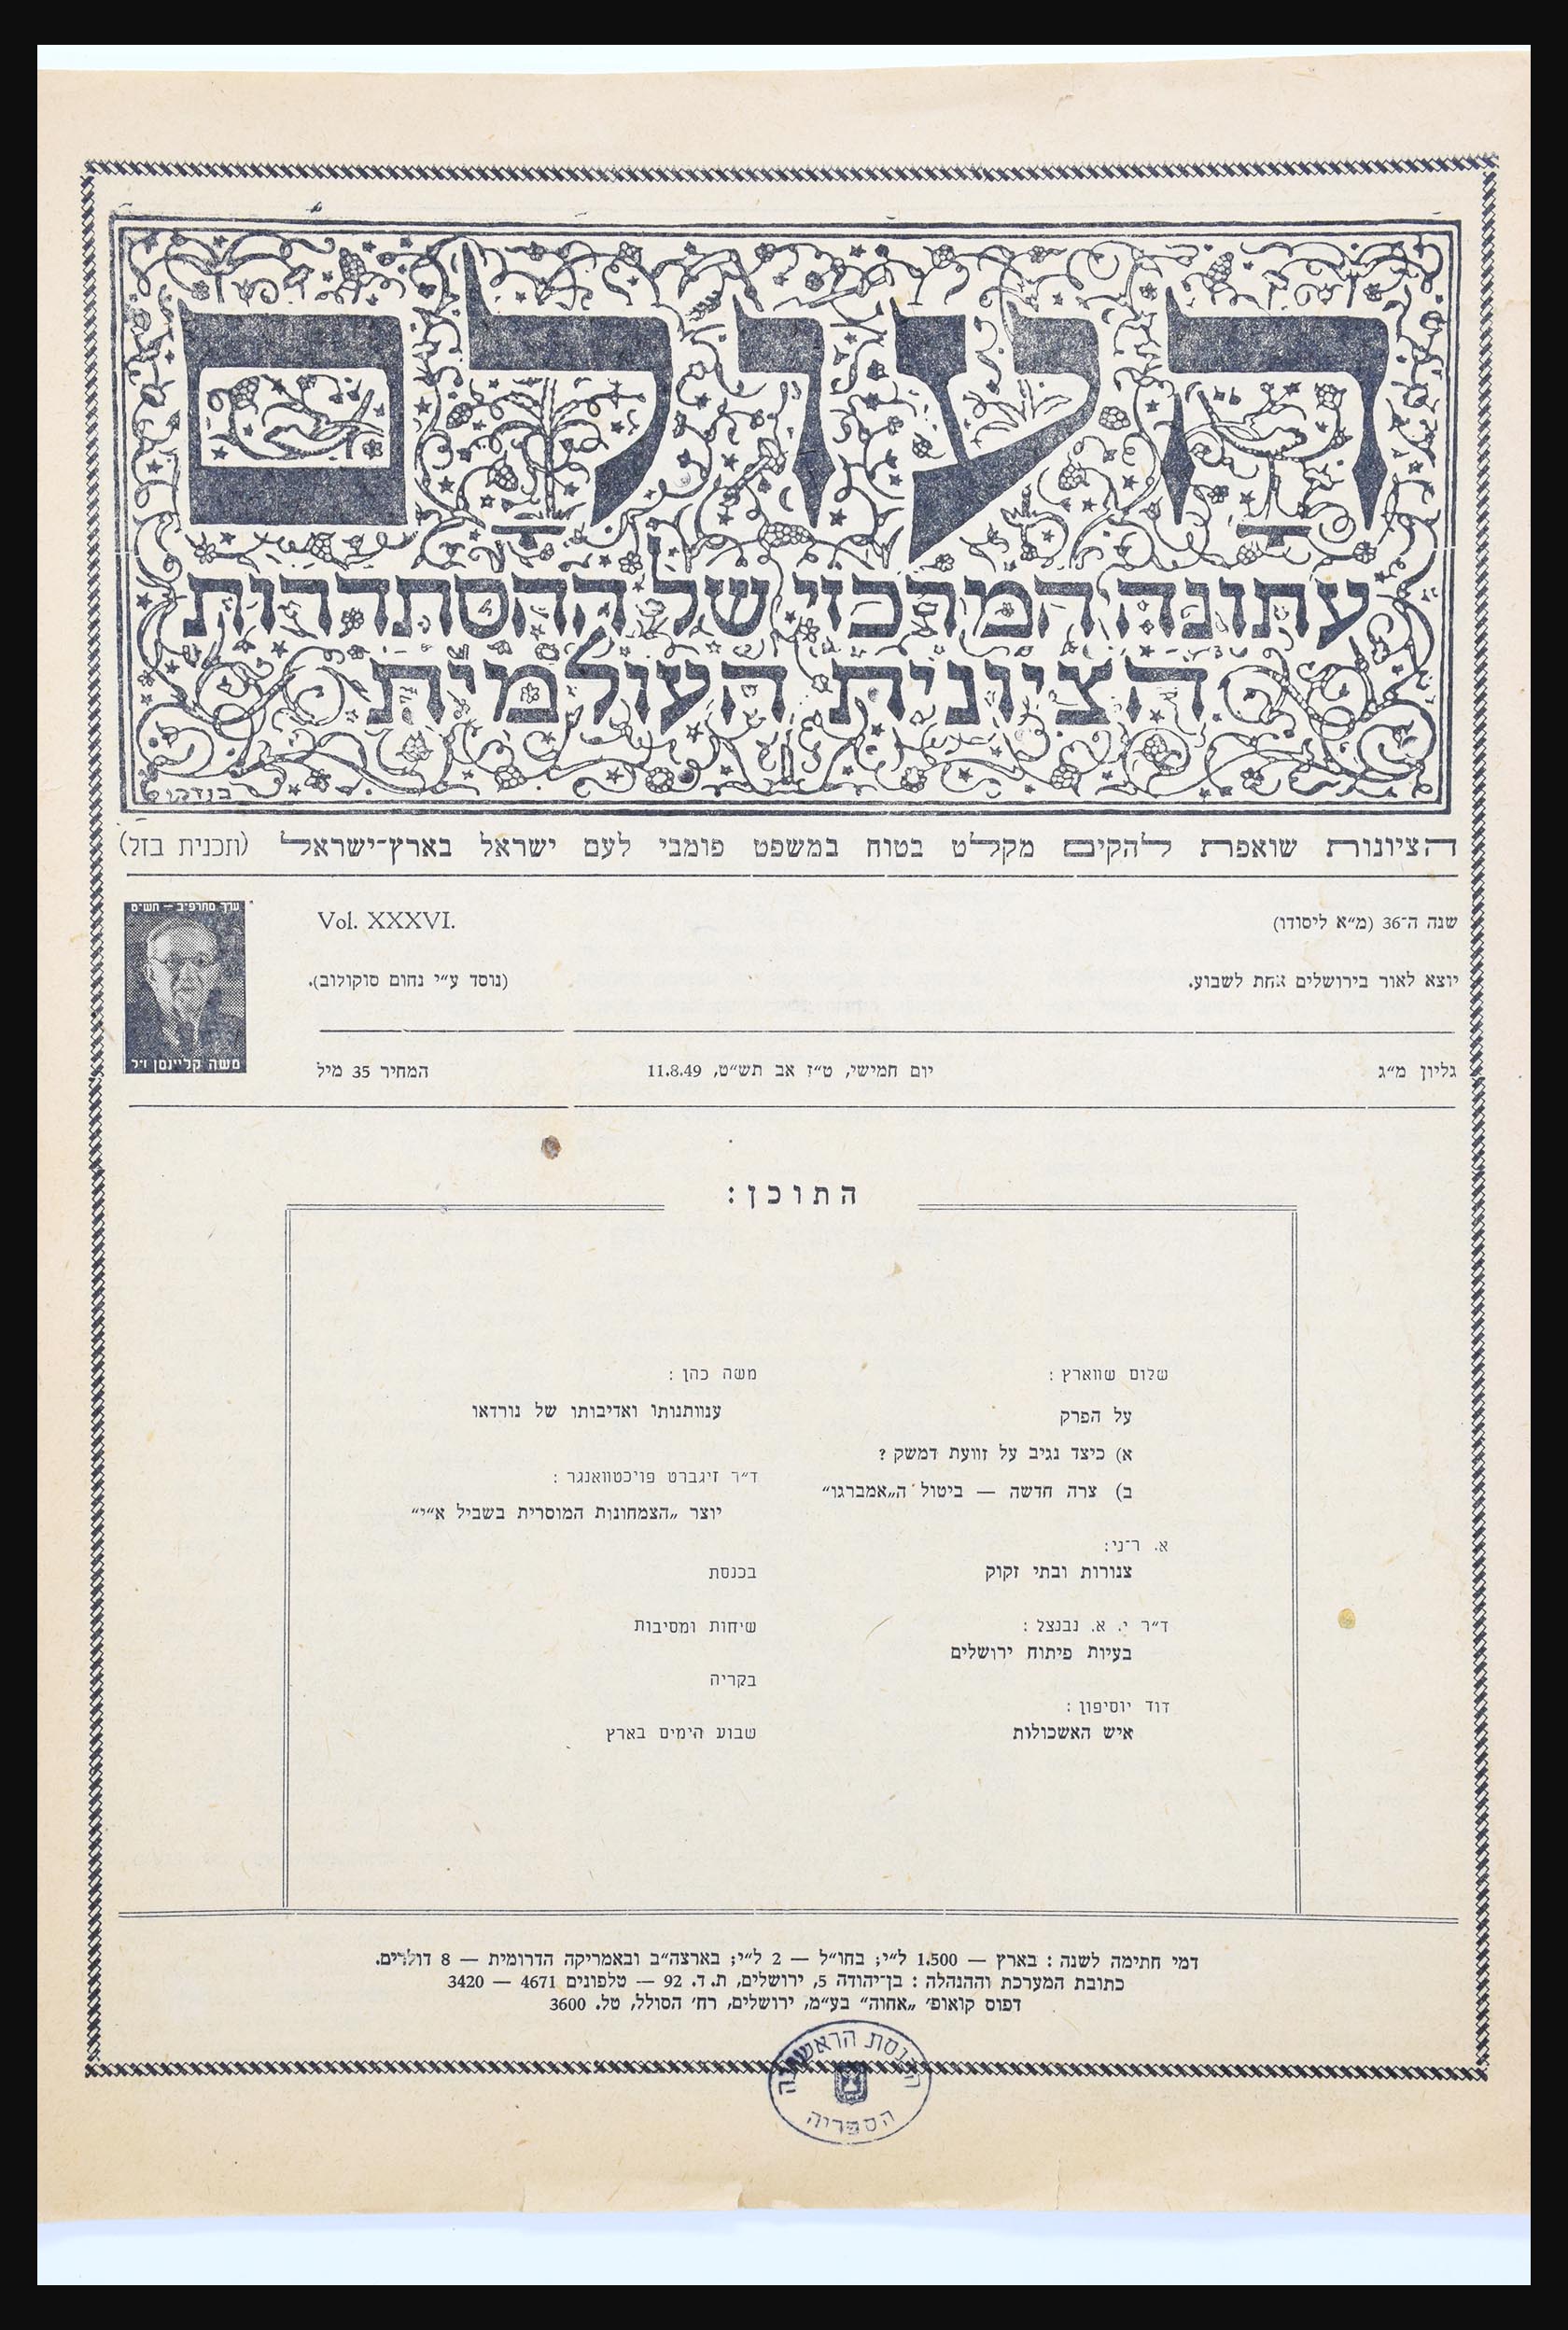 30731 030 - 30731 Israel/Palestina ephemera 1948-1980.